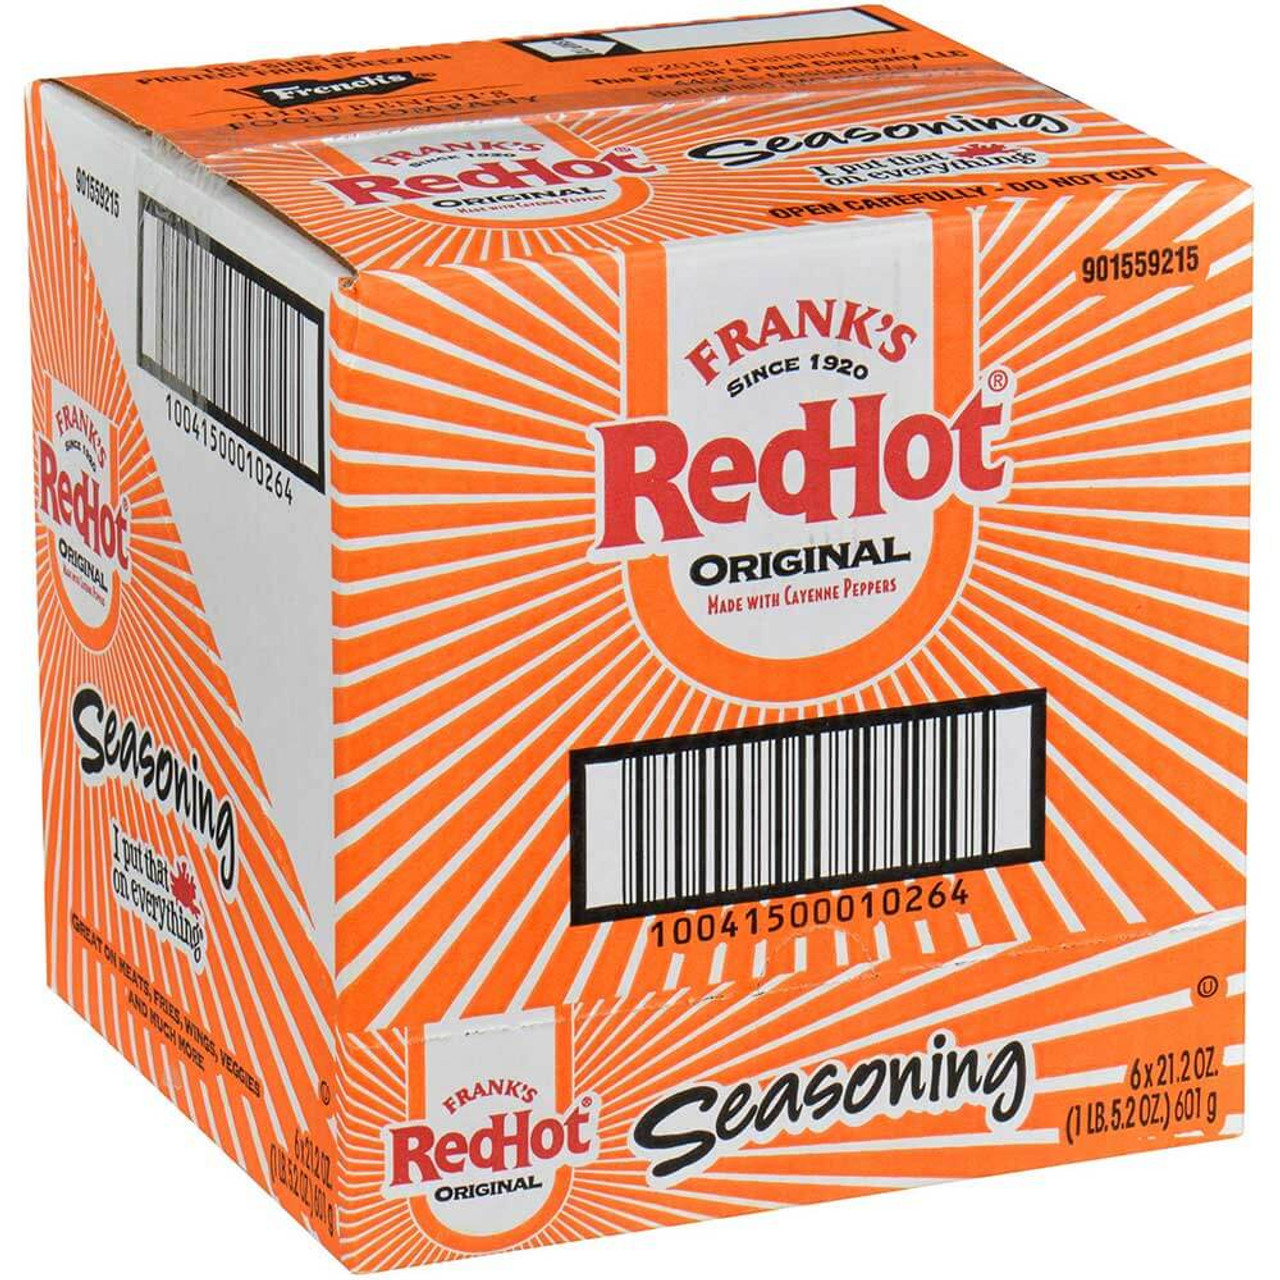 Frank's RedHot Original Seasoning 21.2 oz. (6/Case) - Fiery Heat in Spice Blend - Chicken Pieces